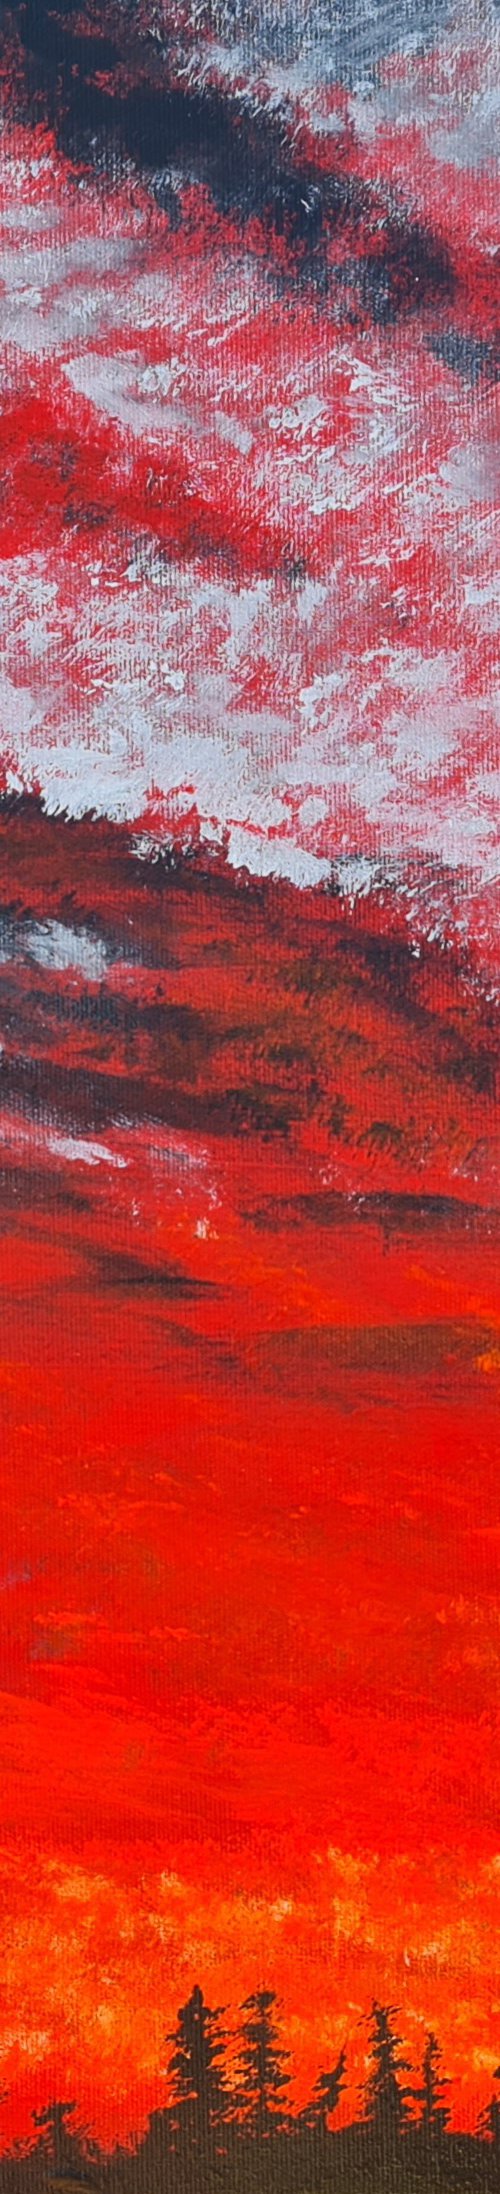 Landscape in red color by Daniel Urbaník